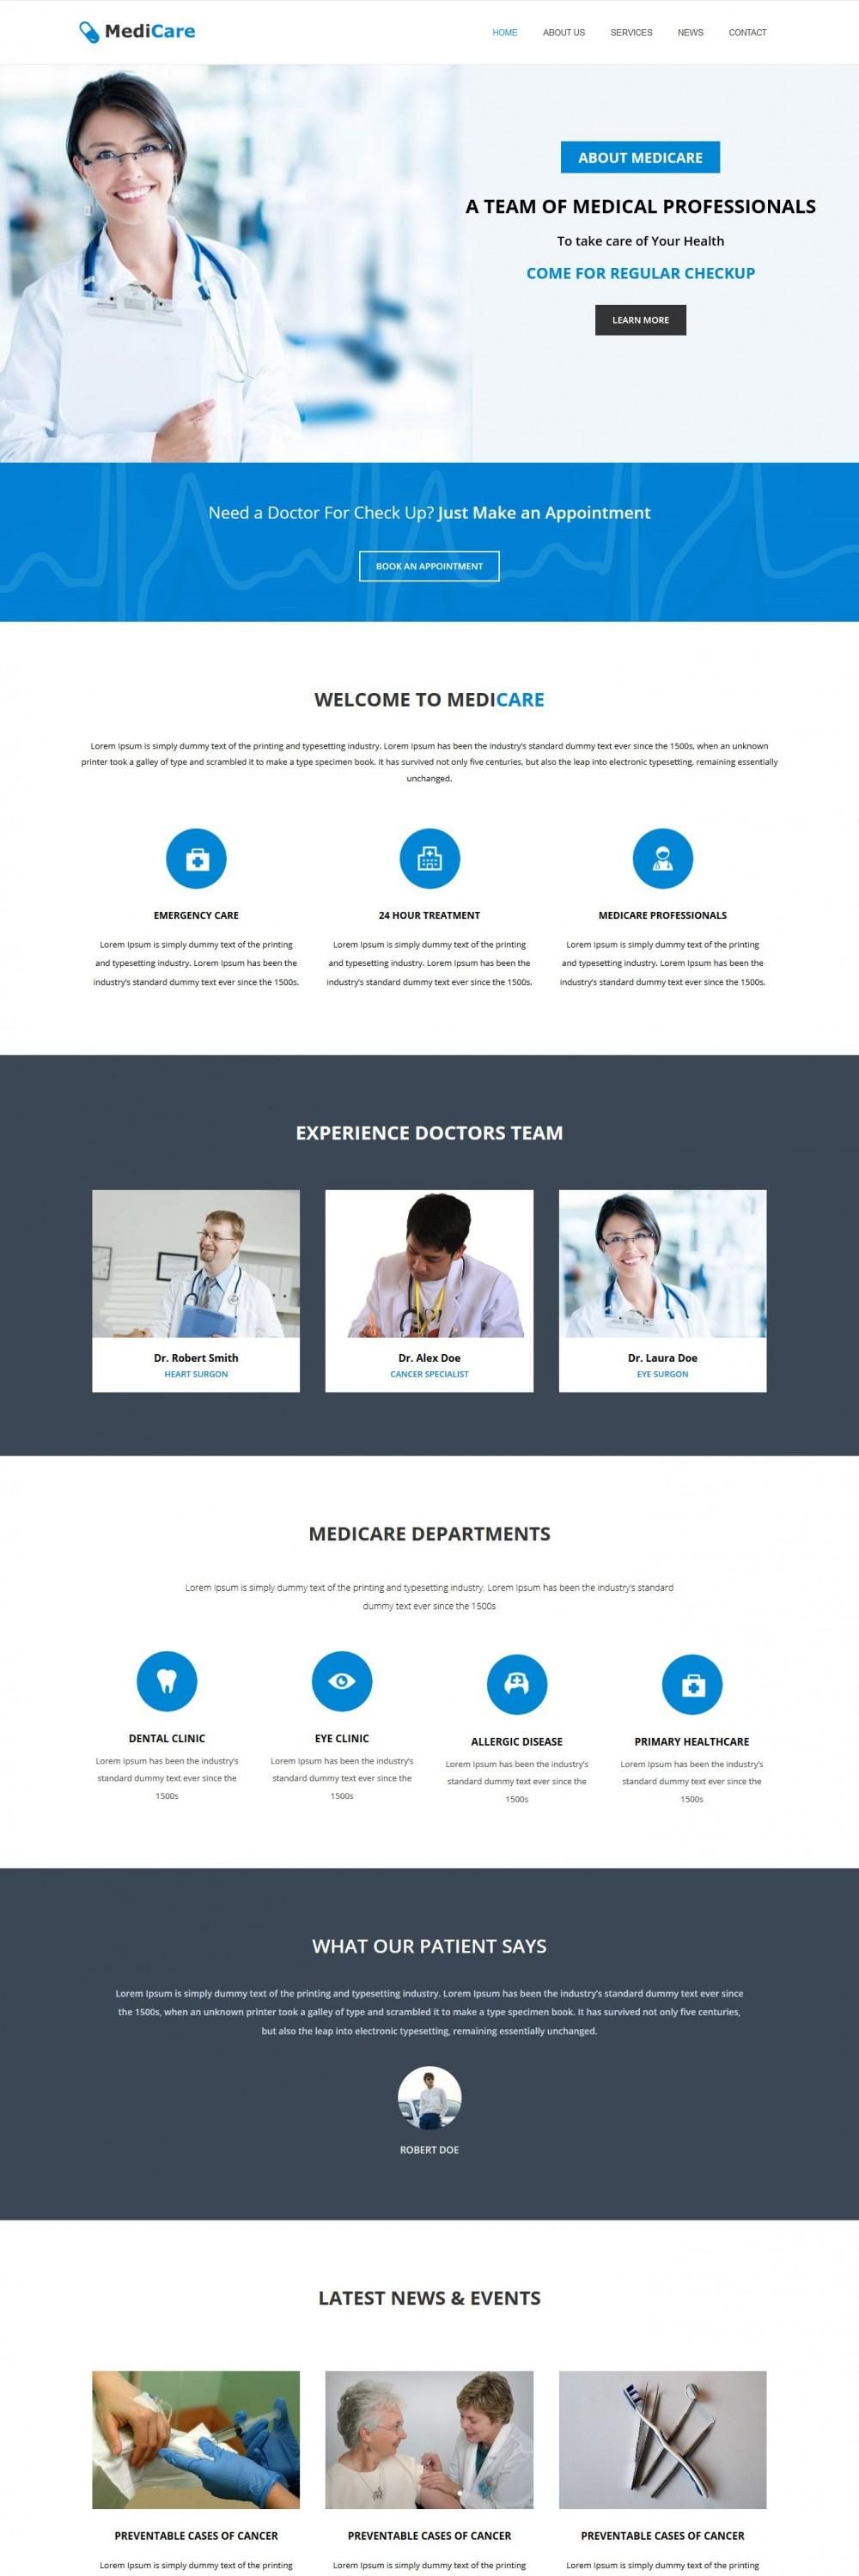 MediCare - Health Care Medical WordPress Theme